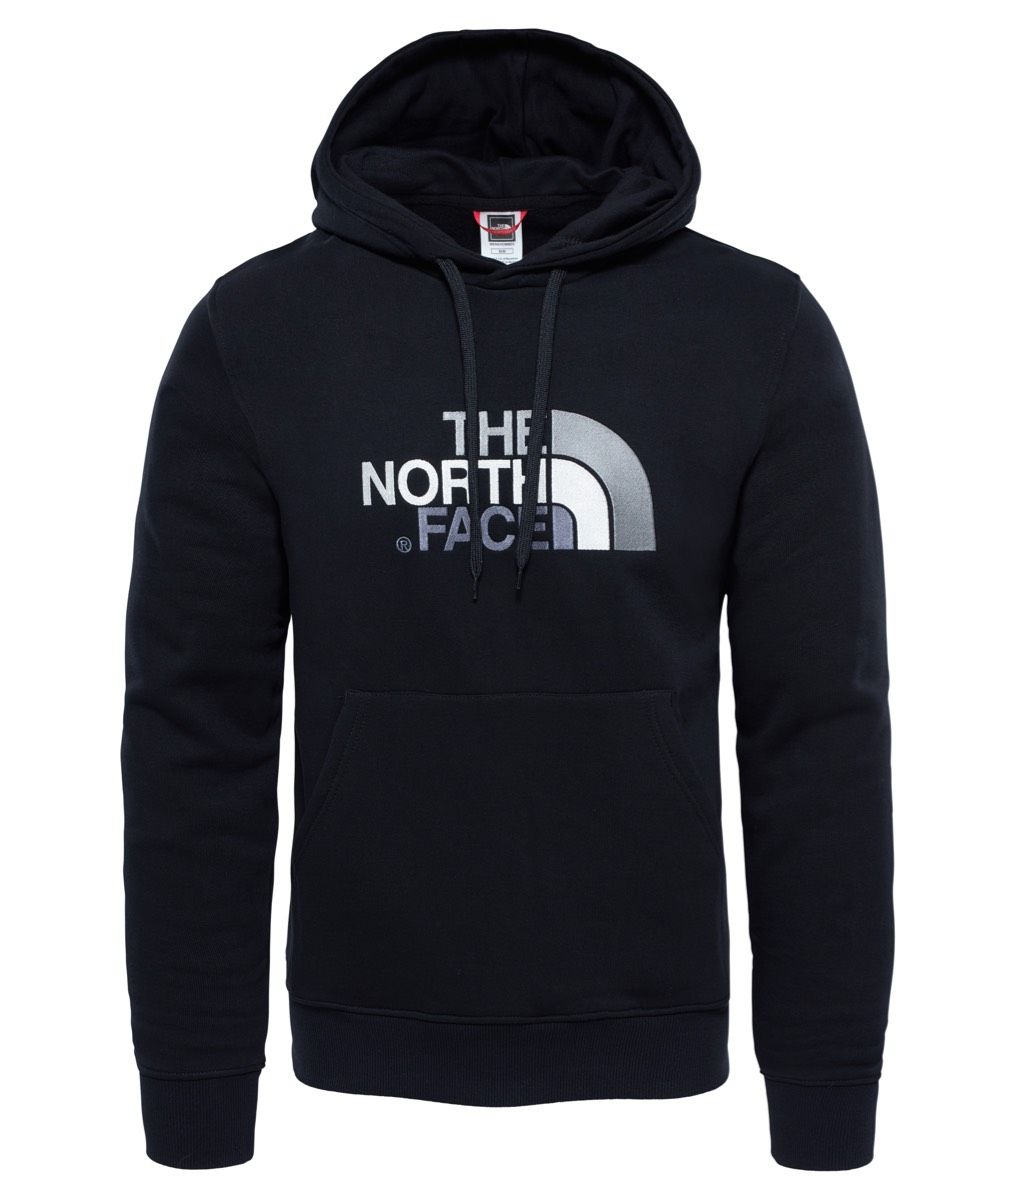 The North Face Men's Drew Peak Pullover Hoodie Black/Black